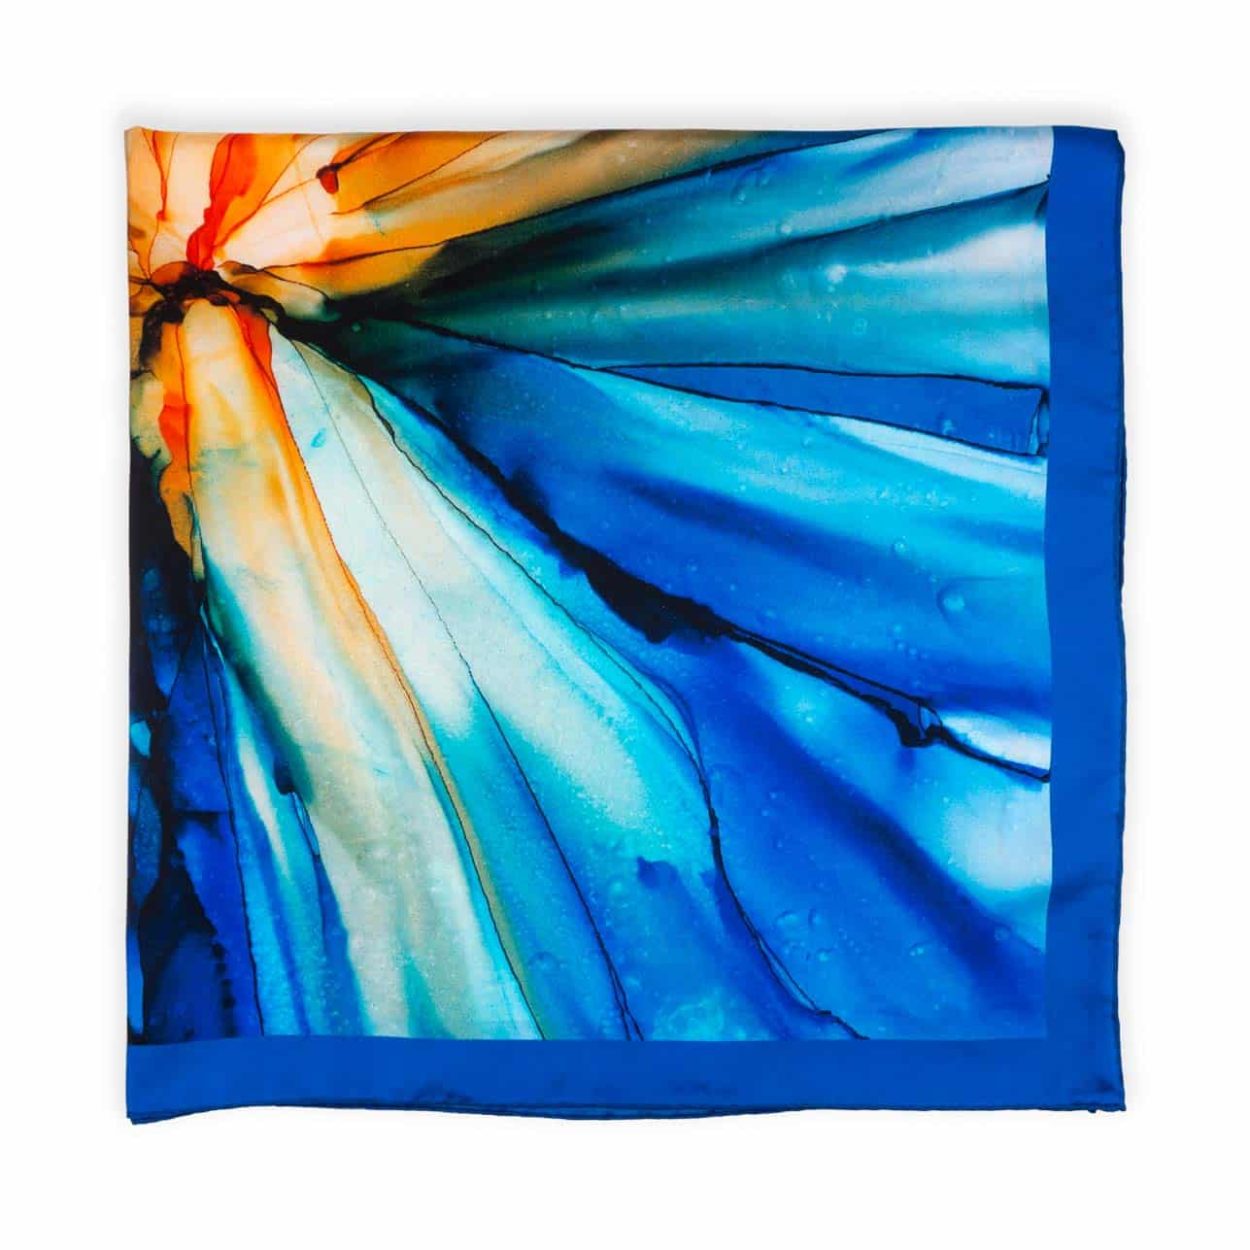 Pañuelo seda azul cuadrado